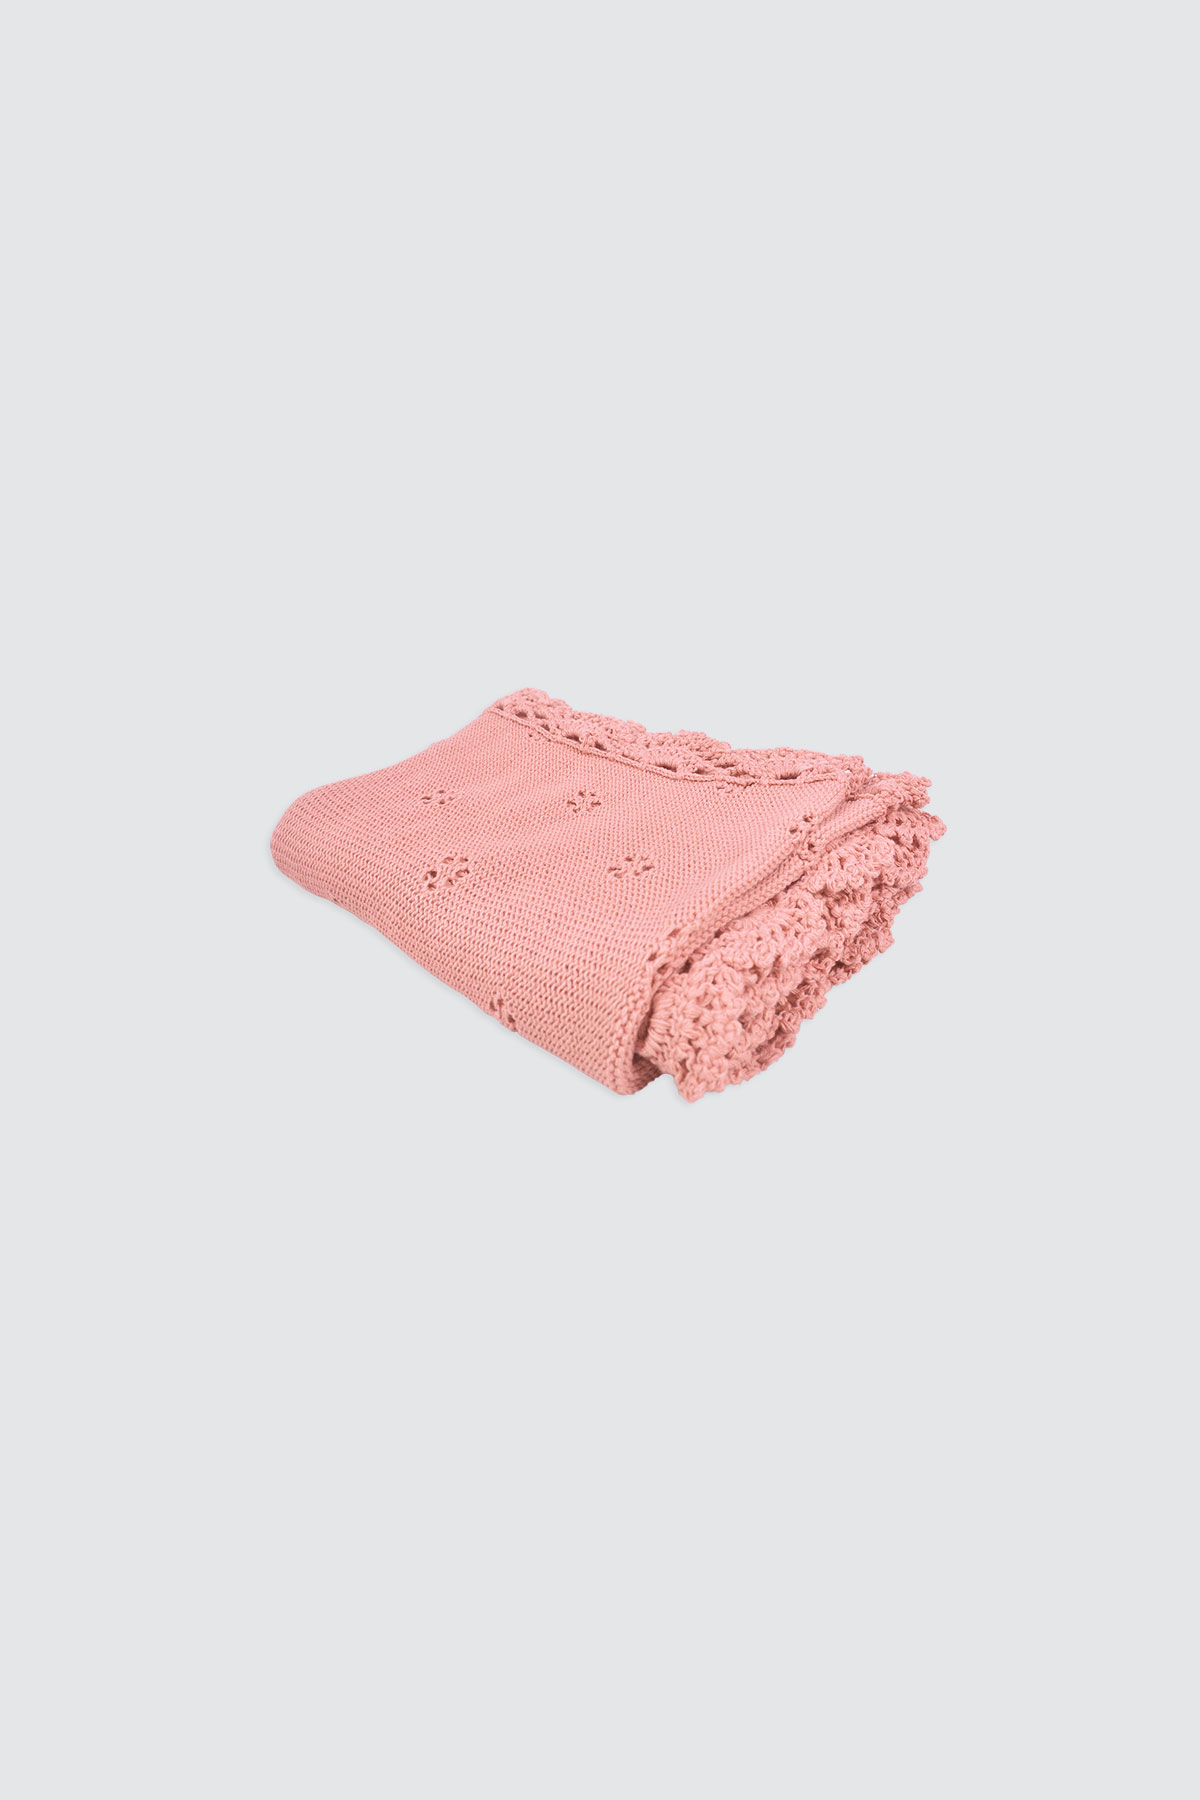 Camelia Blanket Dusty Pink - Kidddiposh - Nae Tokki